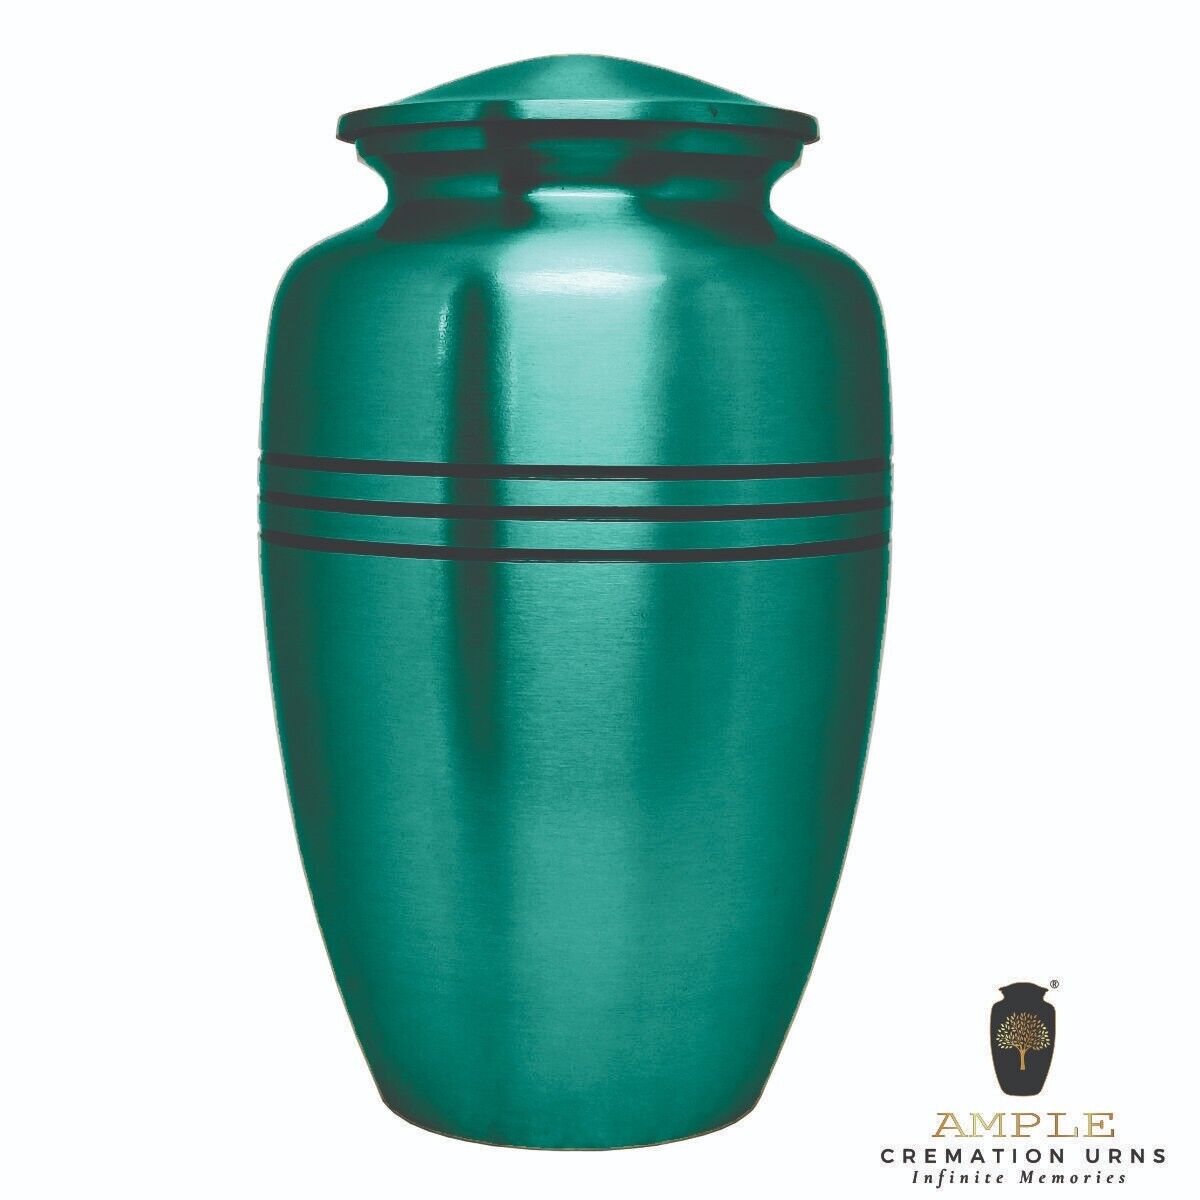 Premium Large Adult Green Cremation Urns for Human Ashes - Includes Velvet Bag